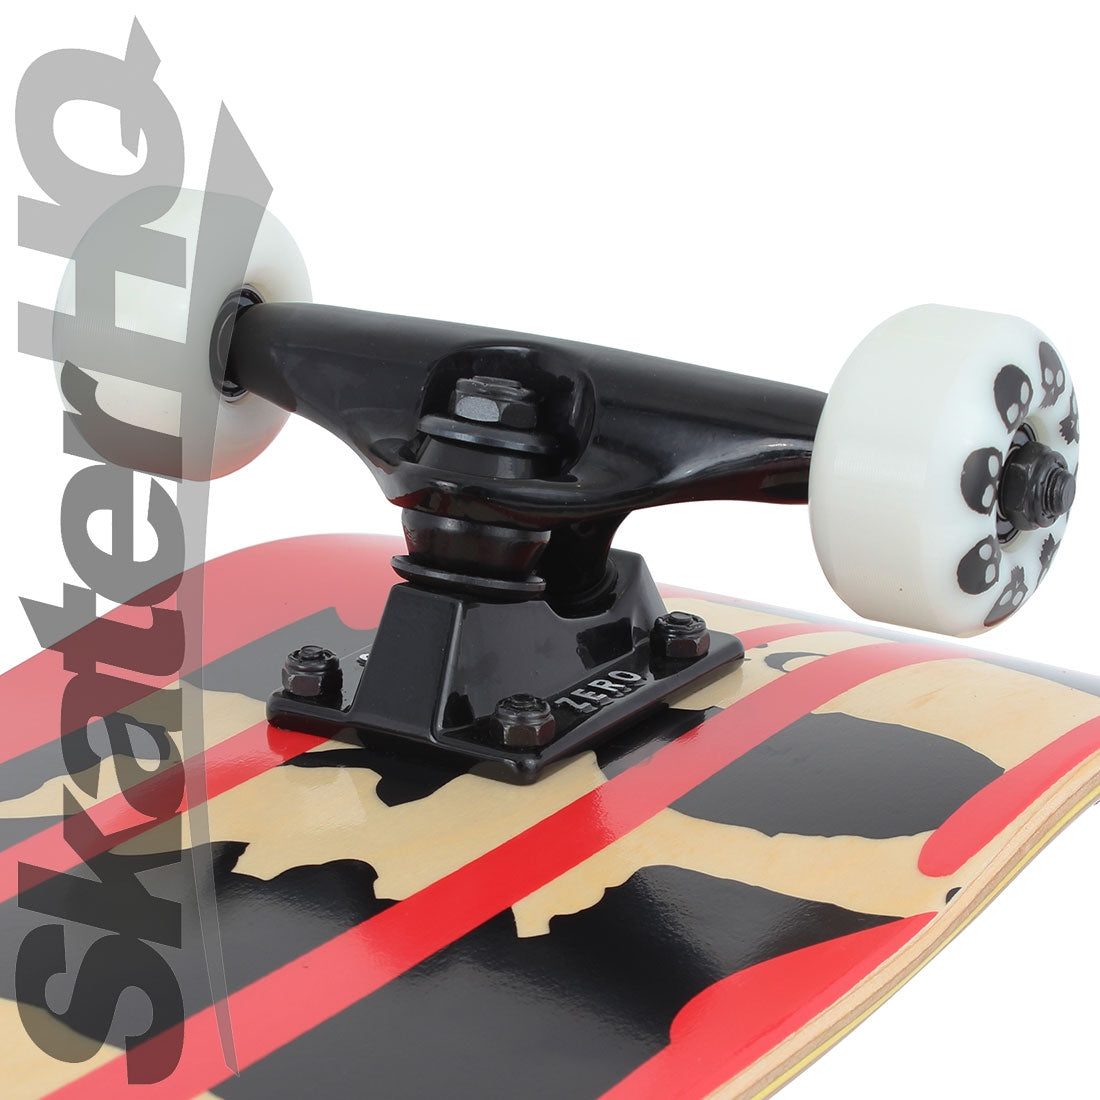 Zero 3 Skull Blood 7.625 Complete - Black/Gold Stain Skateboard Completes Modern Street